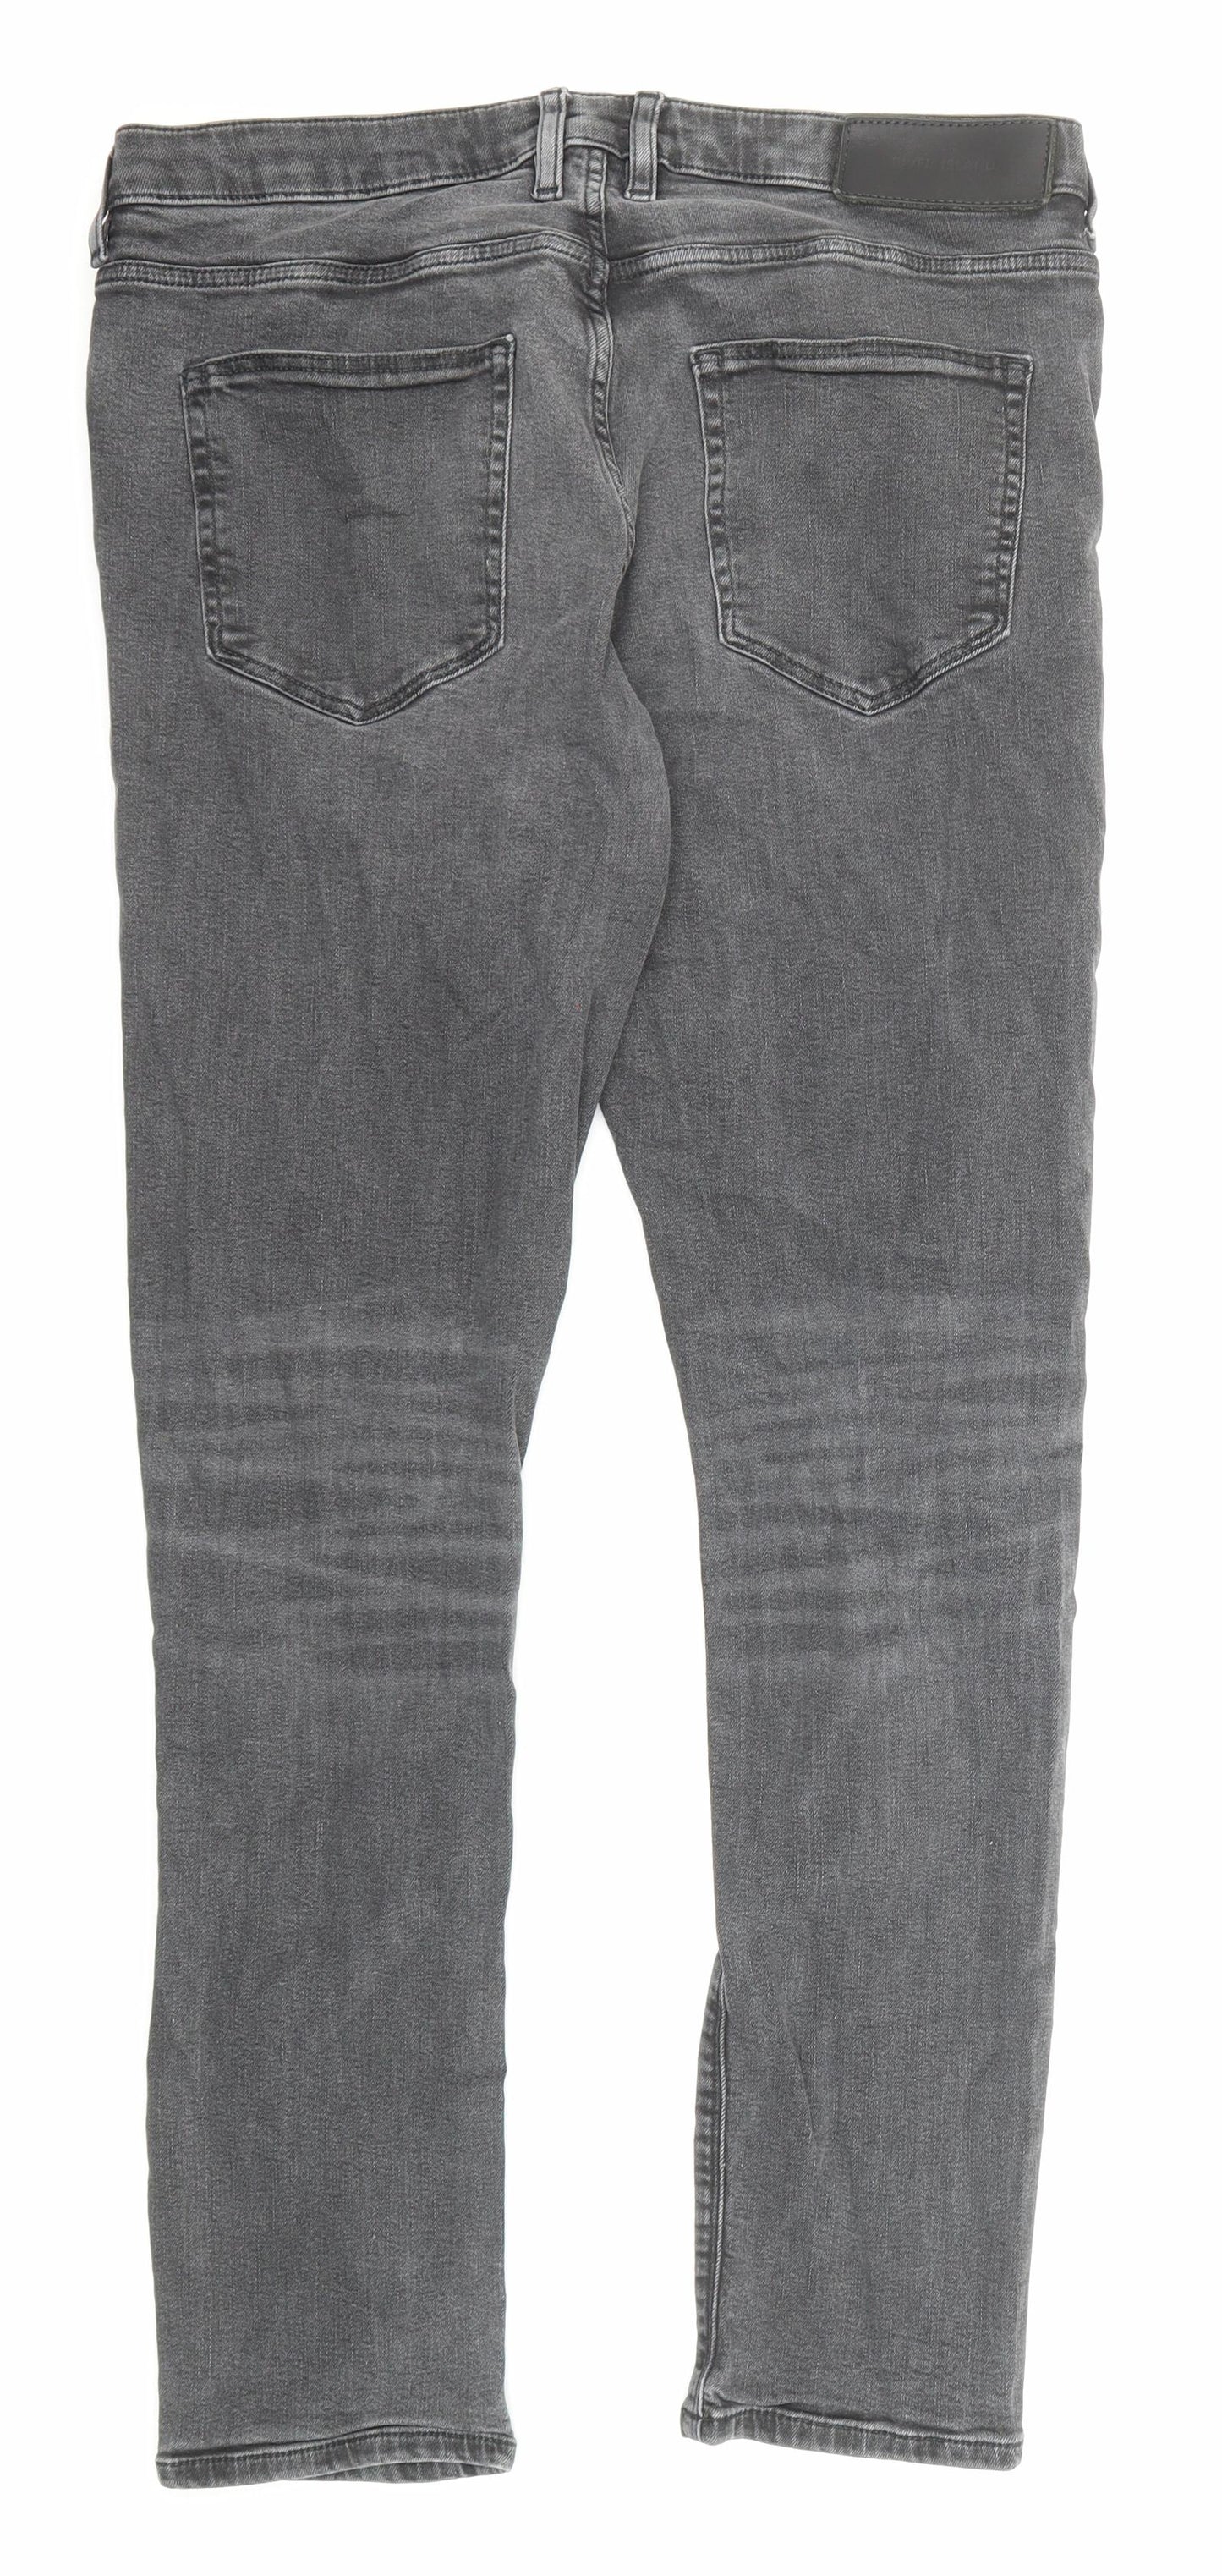 River Island Mens Grey Cotton Skinny Jeans Size 34 in L32 in Regular Zip